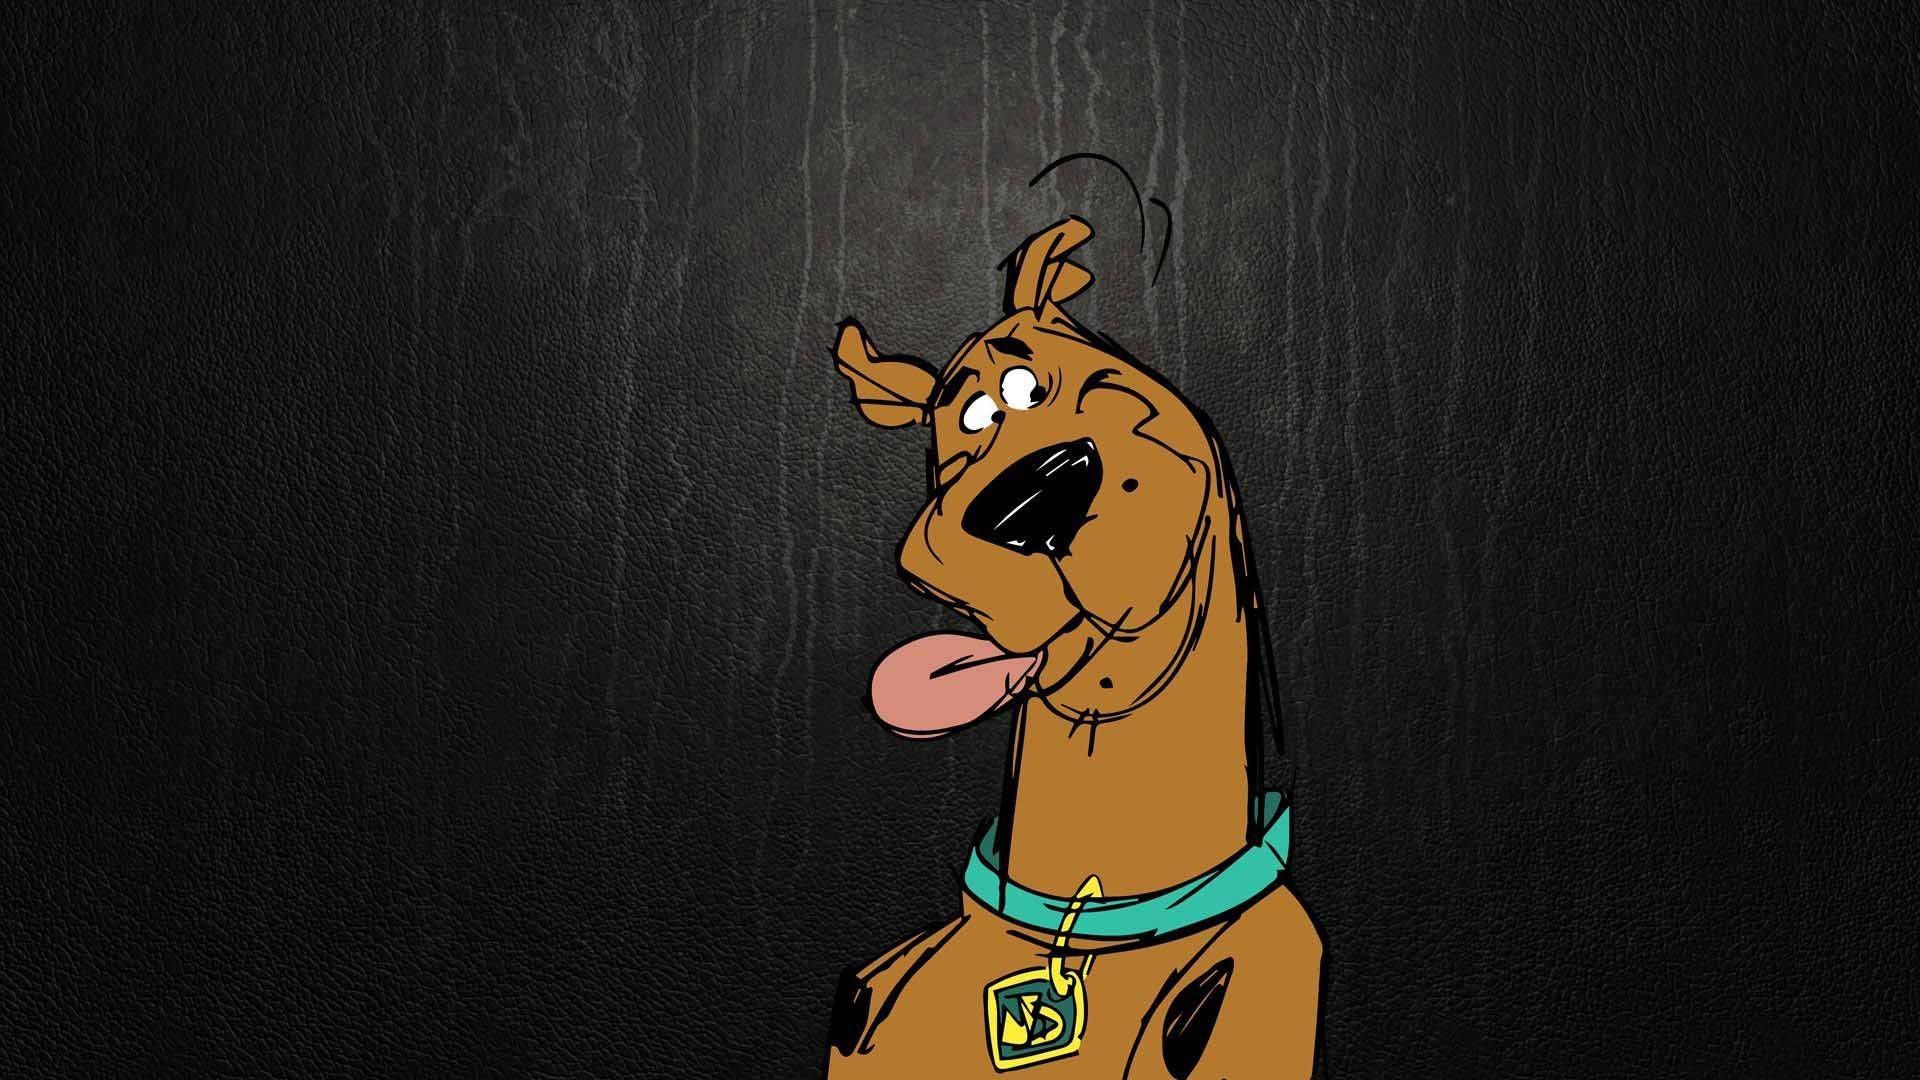  Scooby-Doo Hintergrundbild 1920x1080. Scooby Doo Wallpaper KOSTENLOS